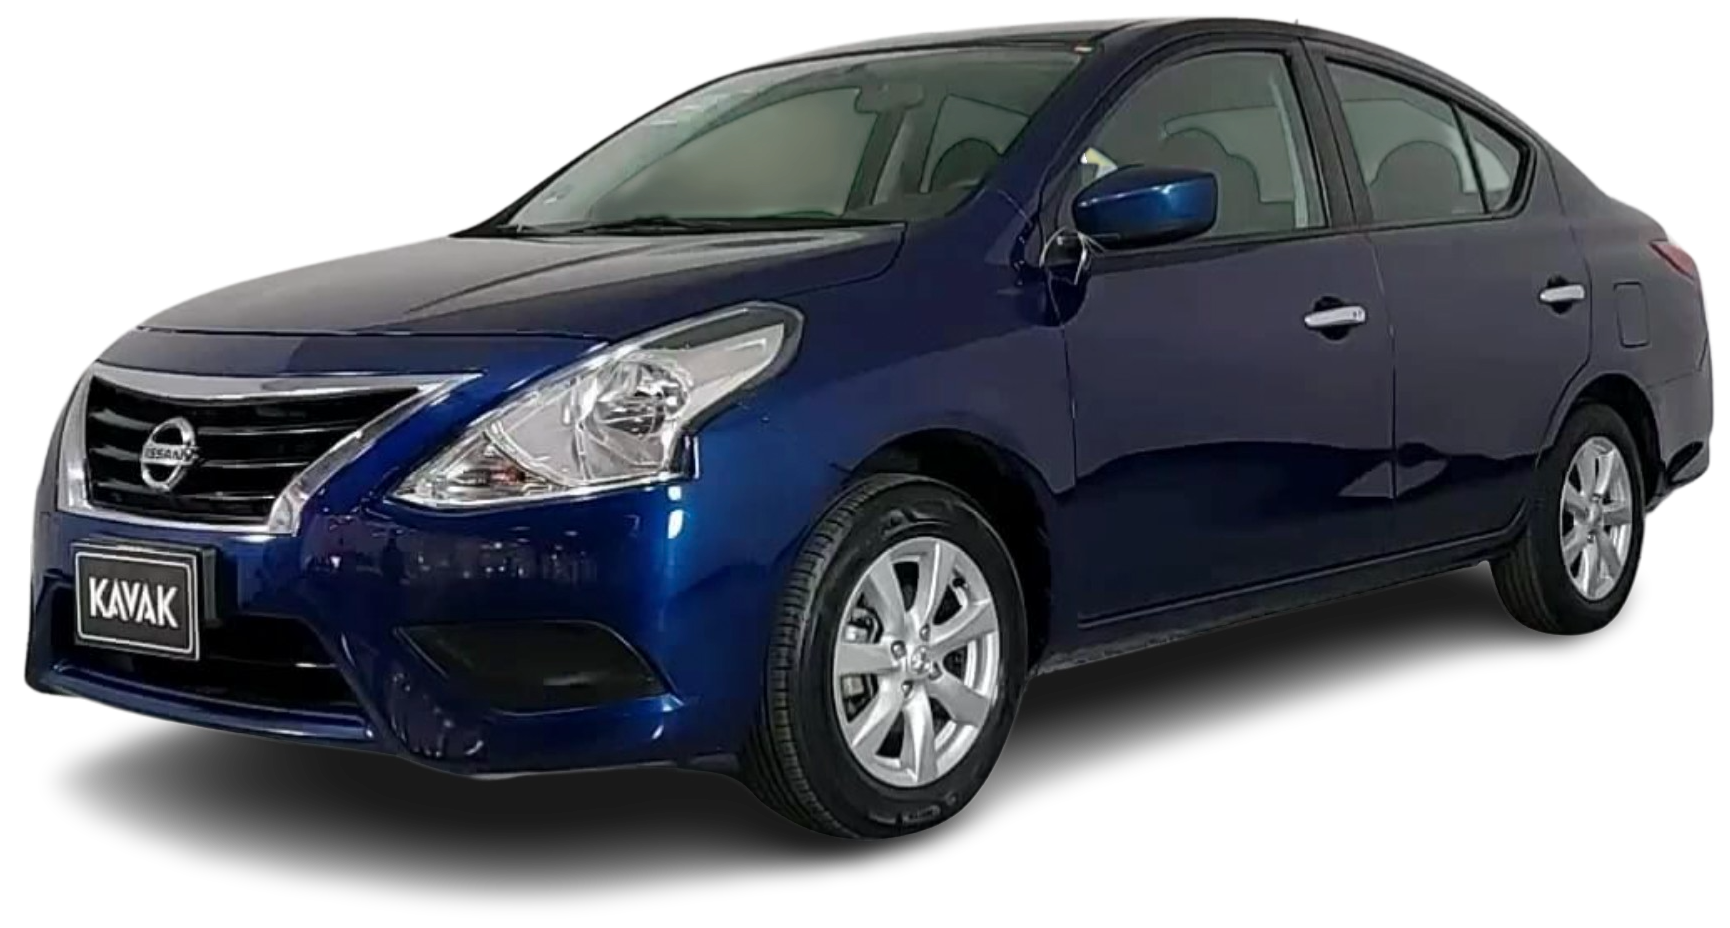 Nissan Versa Sedan 2020 2019 2018 2017 2016 2015 2014 2013 2012 2011 2010